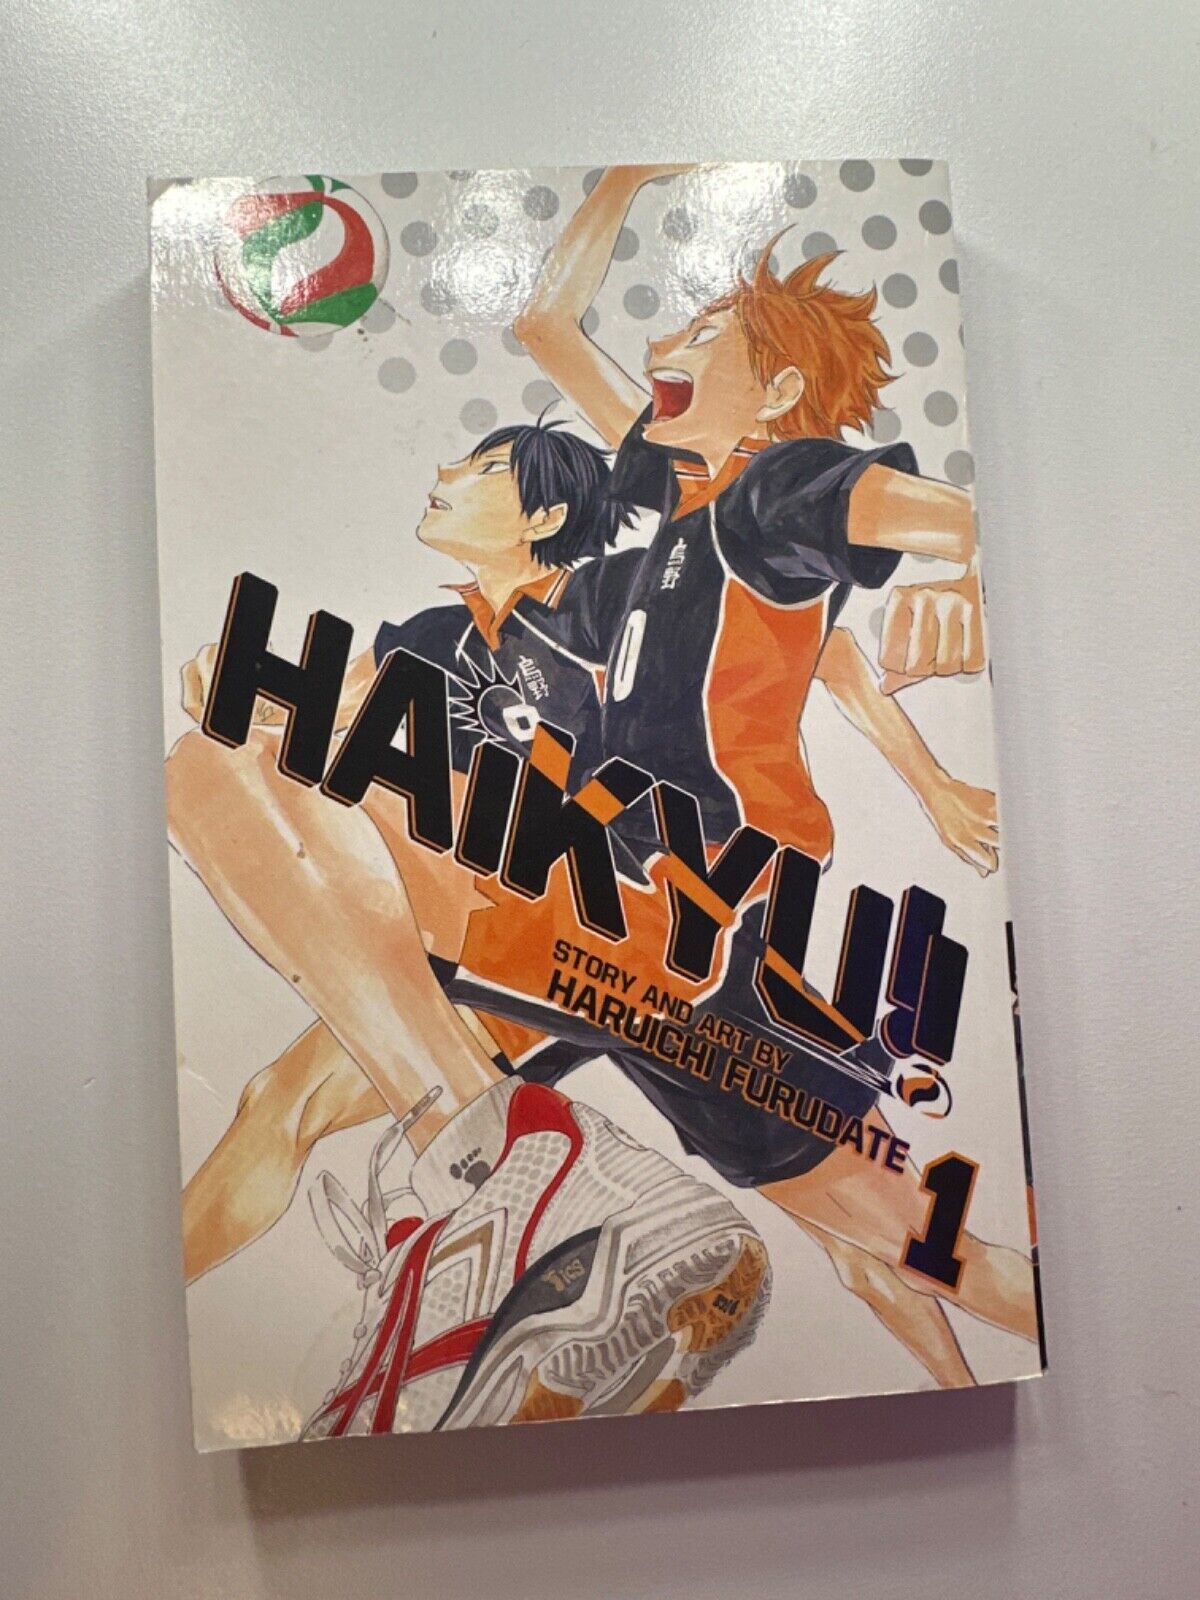 Haikyu Manga English vol-1 by haruichi furudate